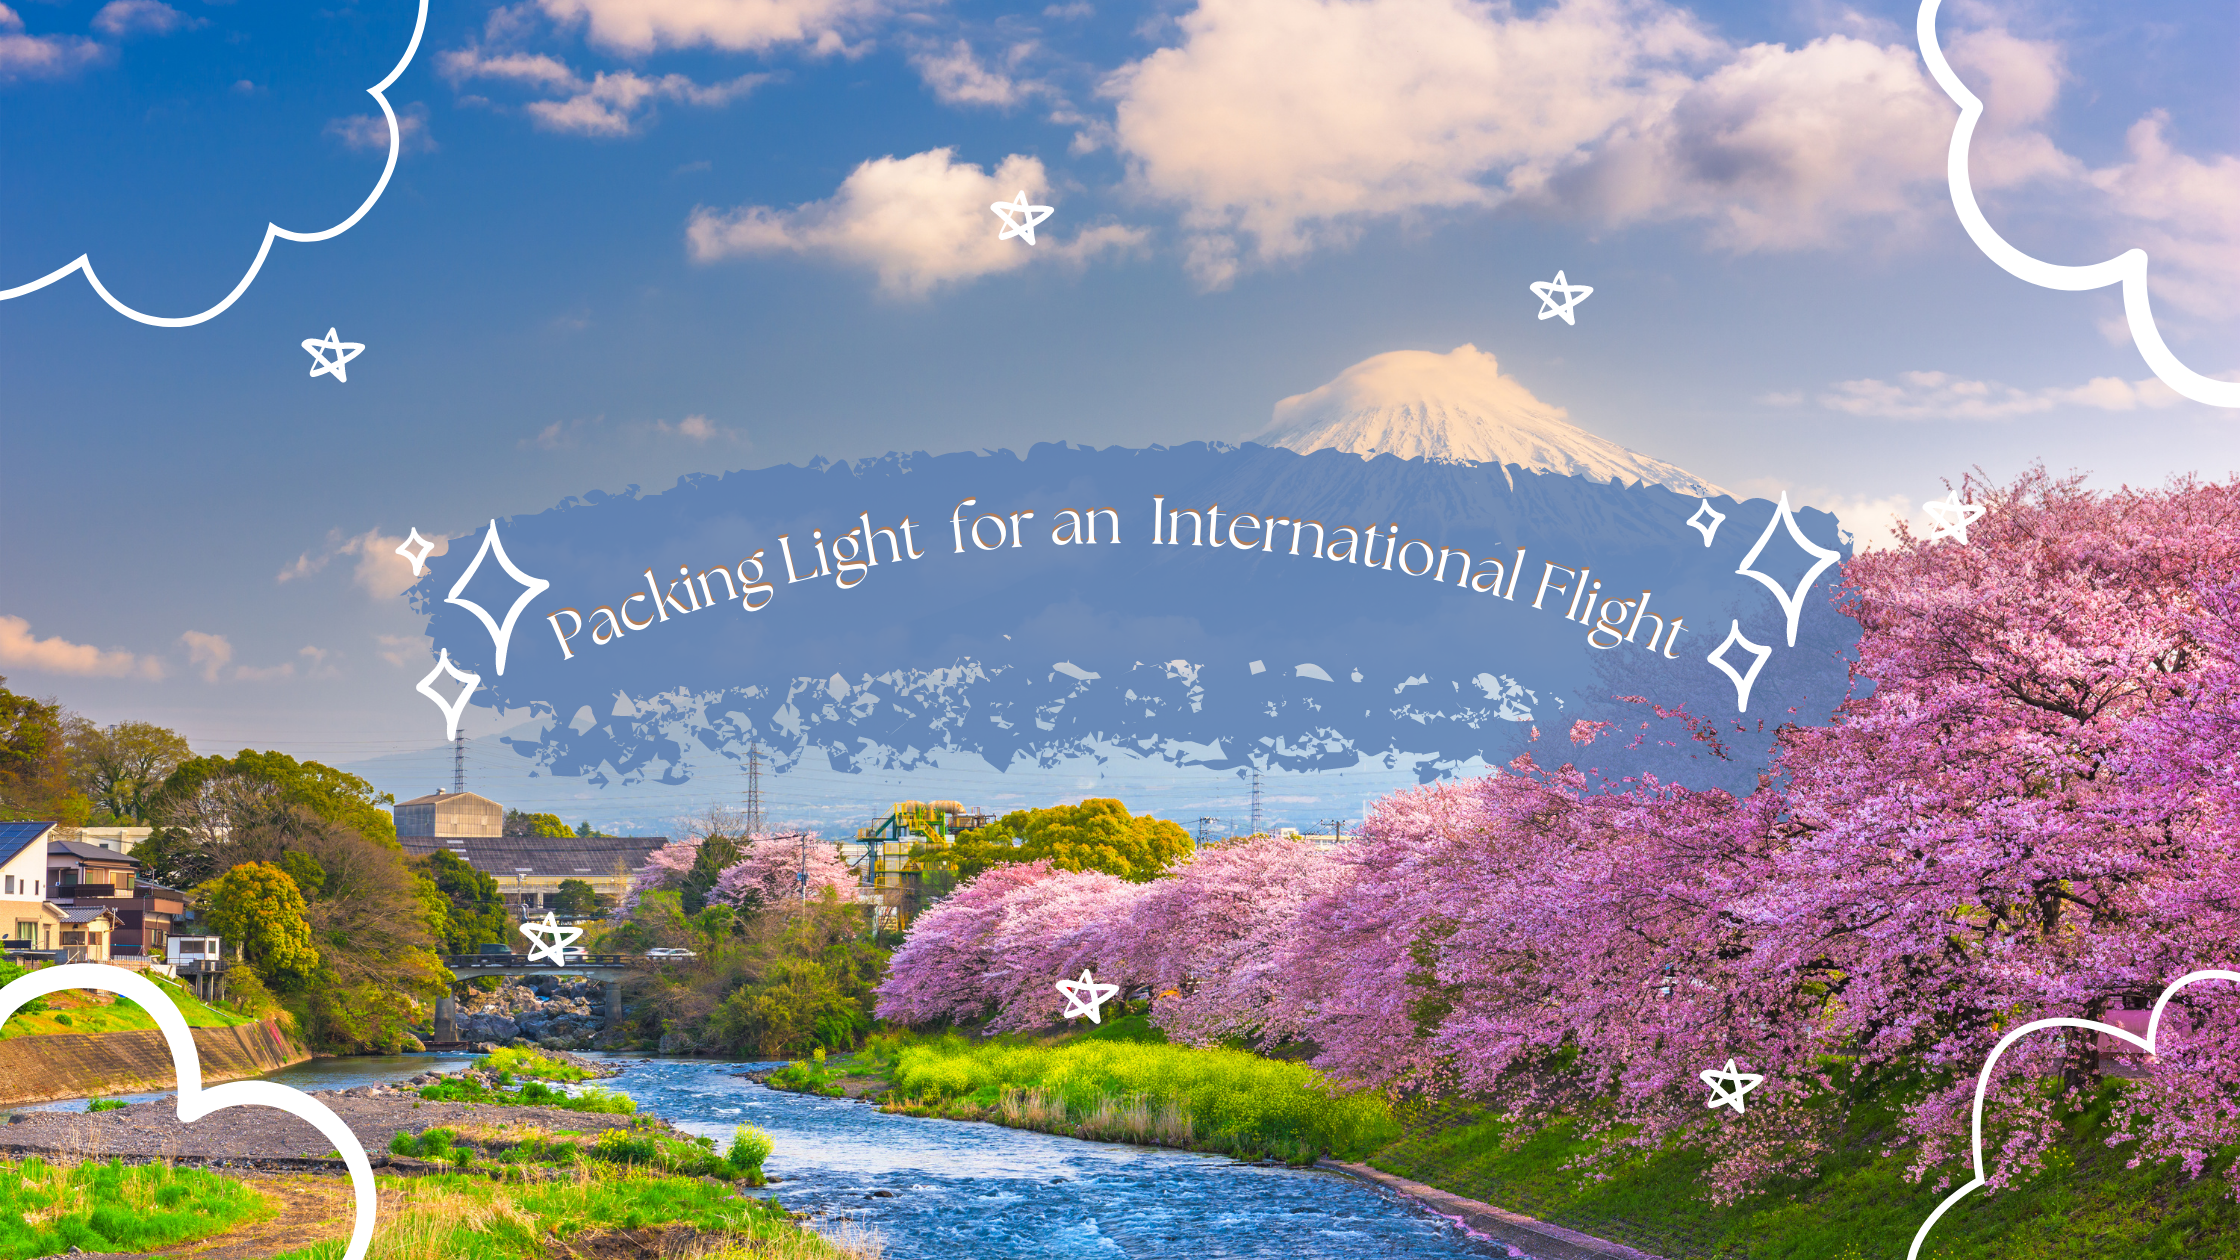 How to Pack Light for an International Flight